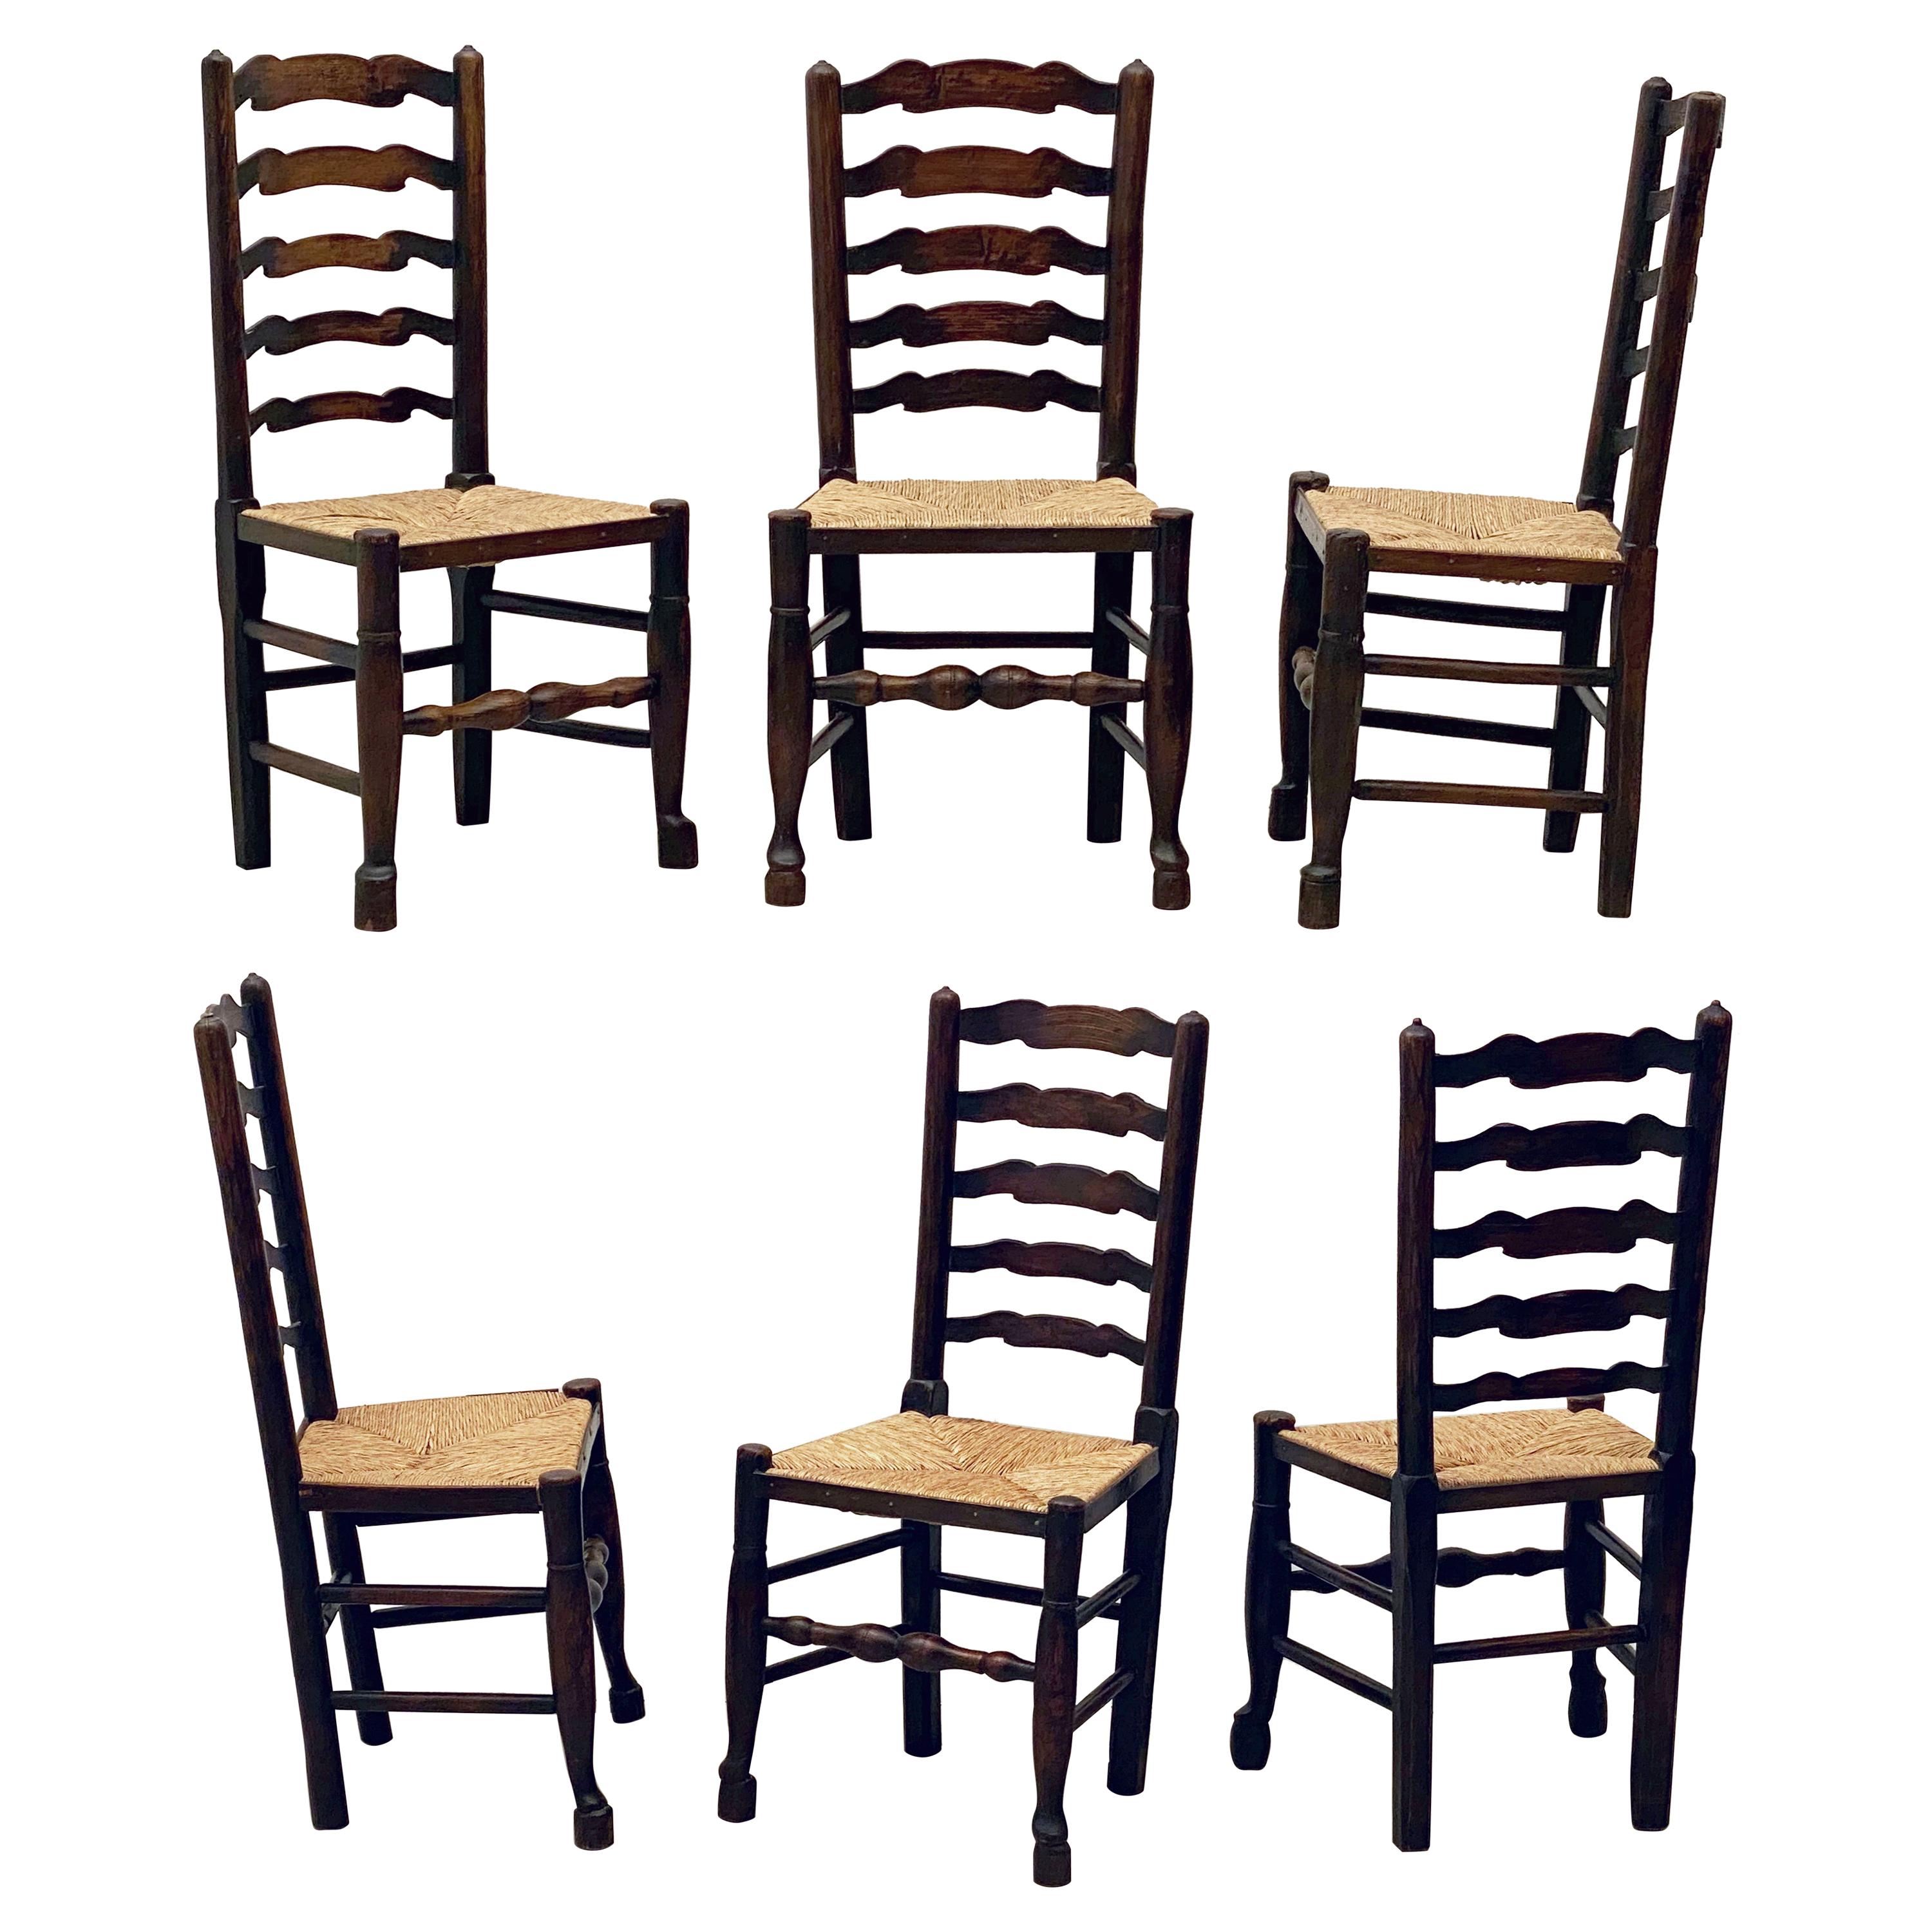 Set of Six English Ladderback Rush-Seat Farm Chairs